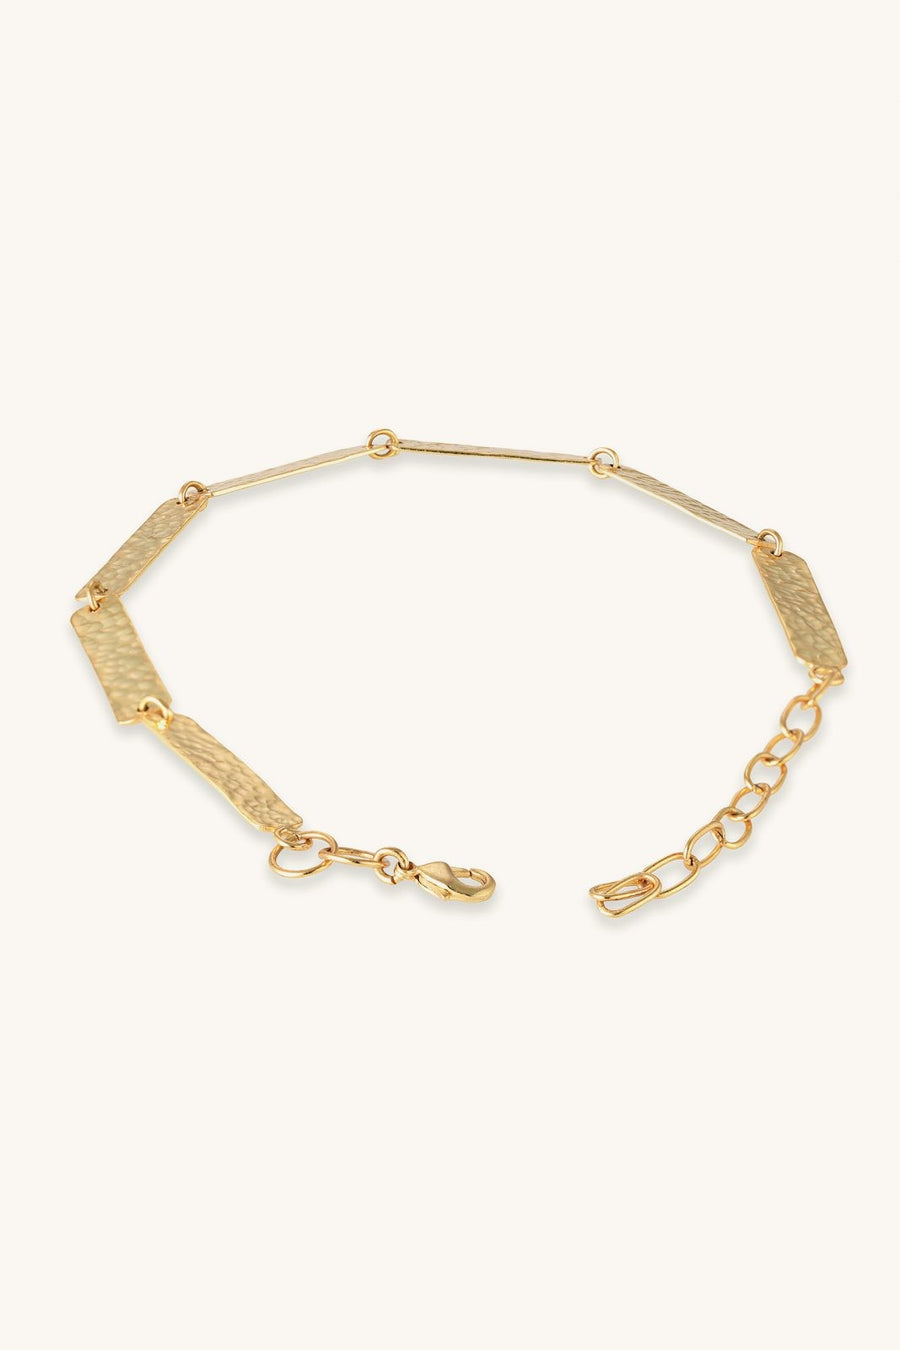 Gold Crush Bracelet, jewelry, accessories, fashion, wristwear, metallic, statement piece.